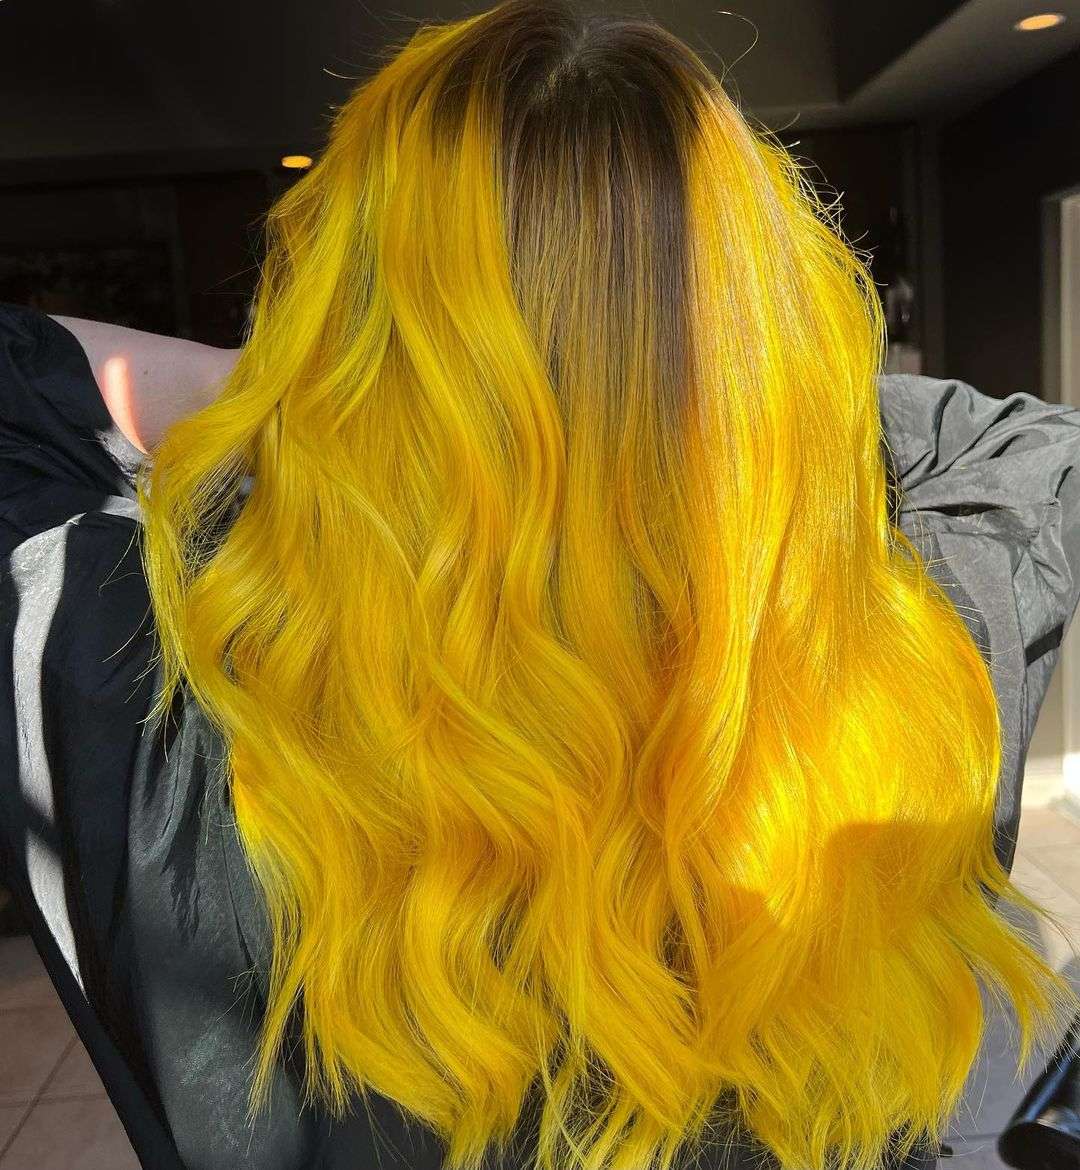 yellow Arctic Fox hair dye on hair